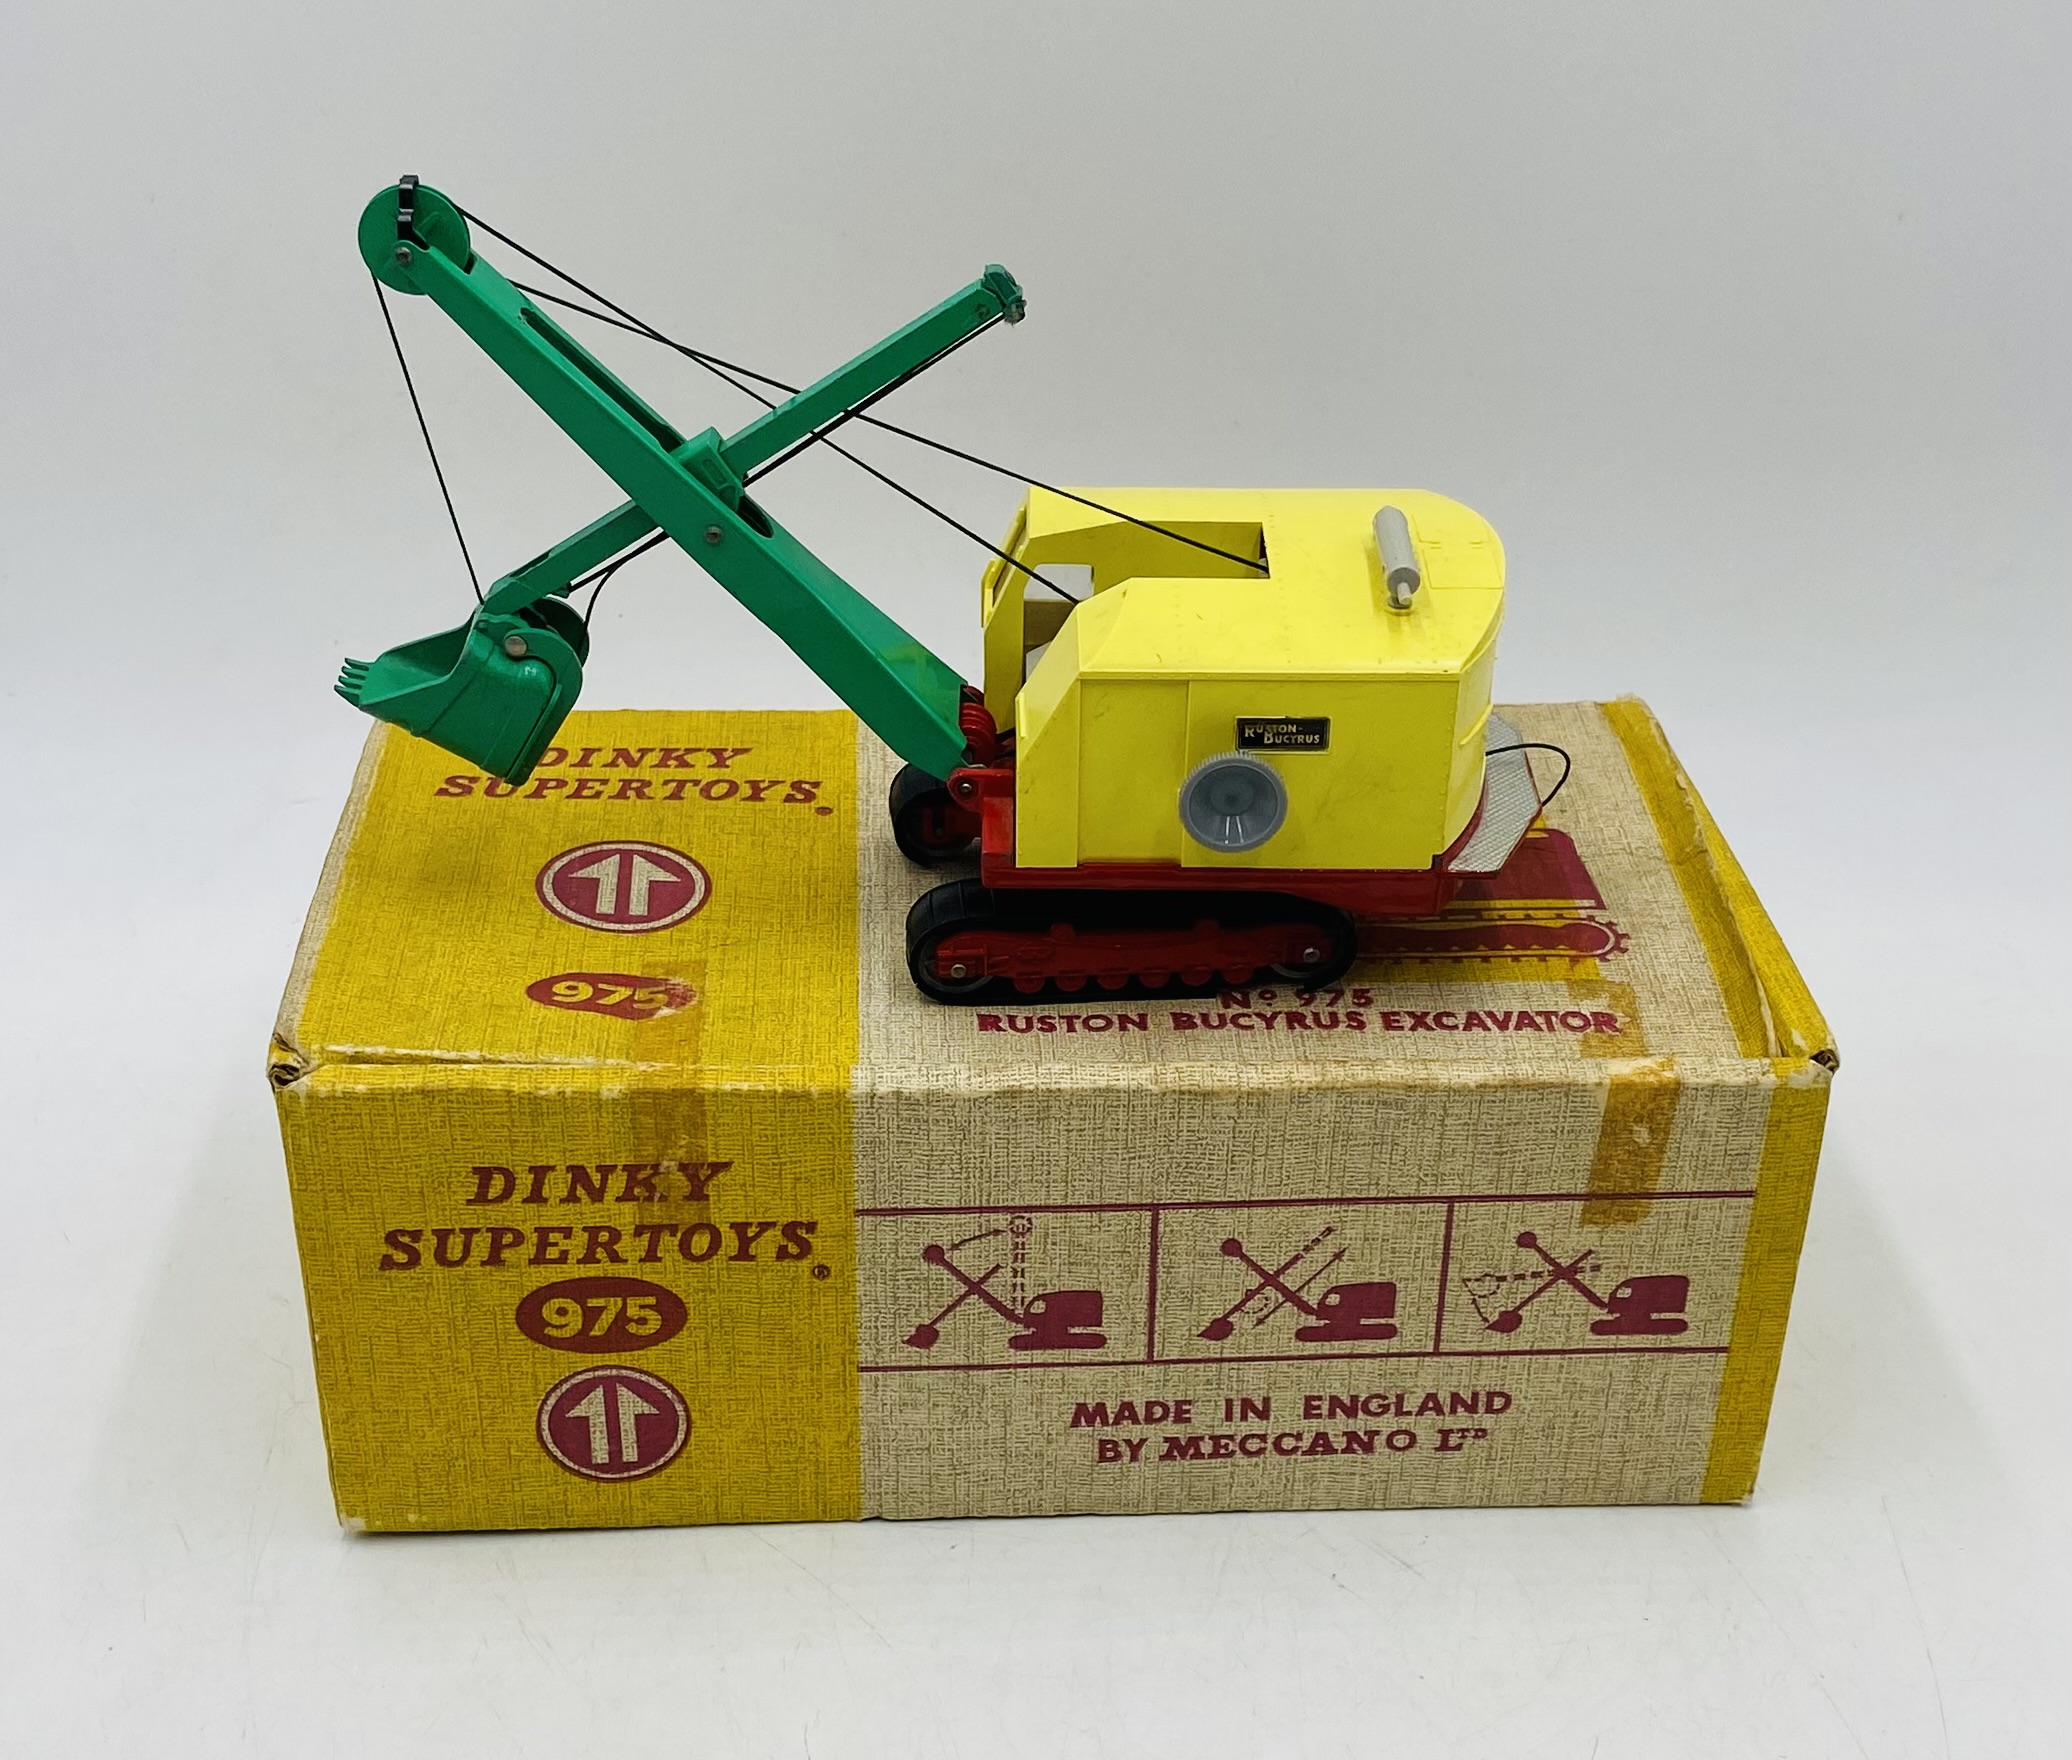 A vintage boxed Dinky Supertoys "Ruston Bucyrus Excavator" die-cast model (No 975) - original tracks